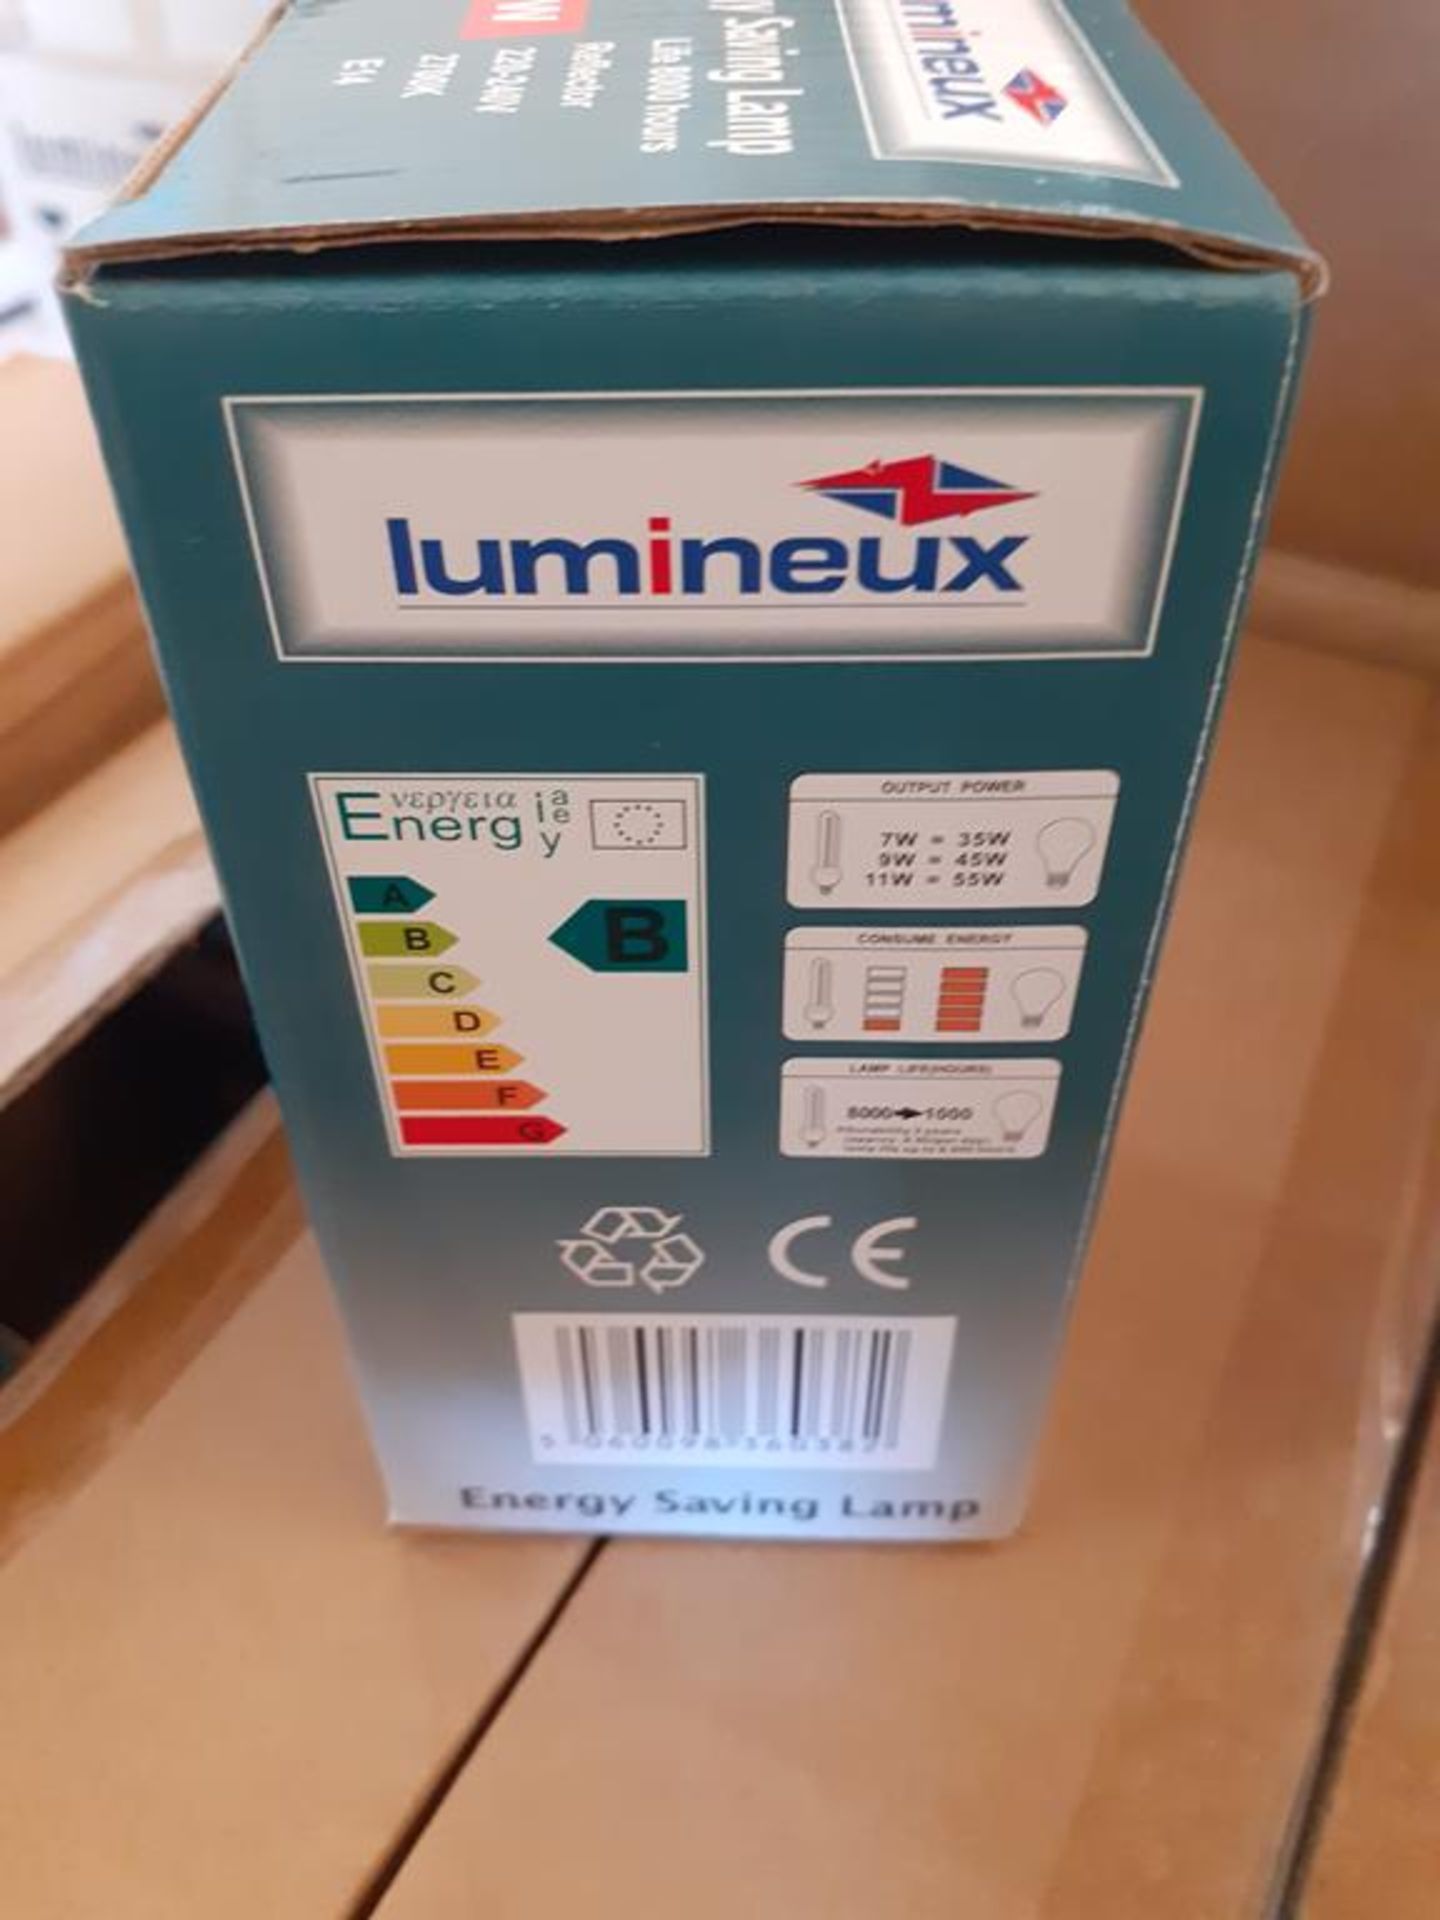 3x boxes of Lumineux Reflector 7W E14 2700K 220-240V Energy Saving Light Bulbs (40pcs per box) - Image 4 of 4